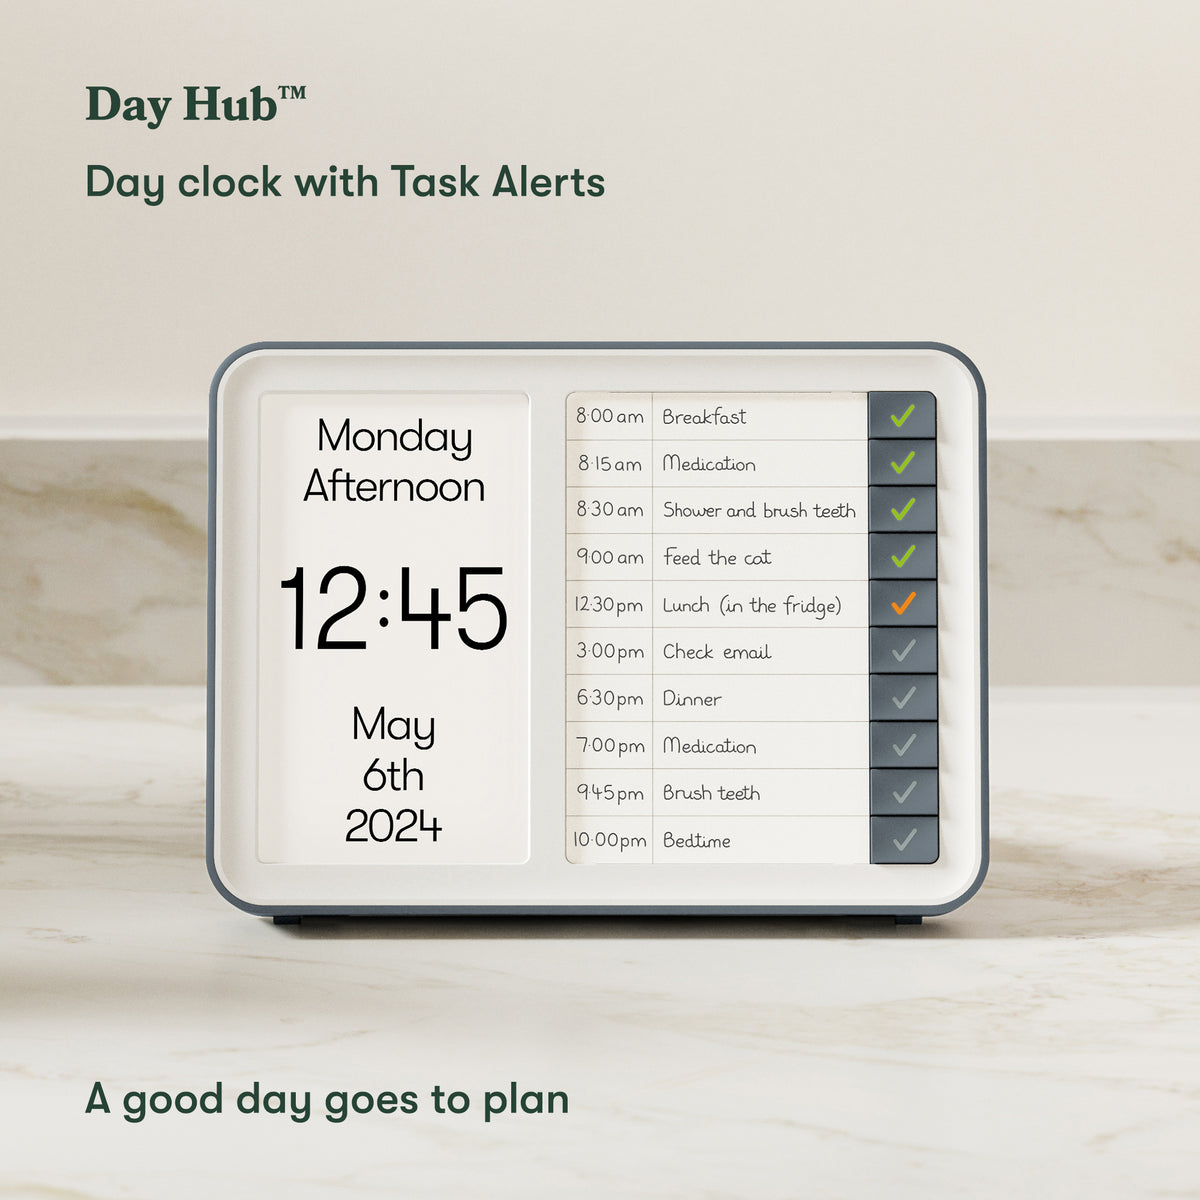 Day Hub day clock